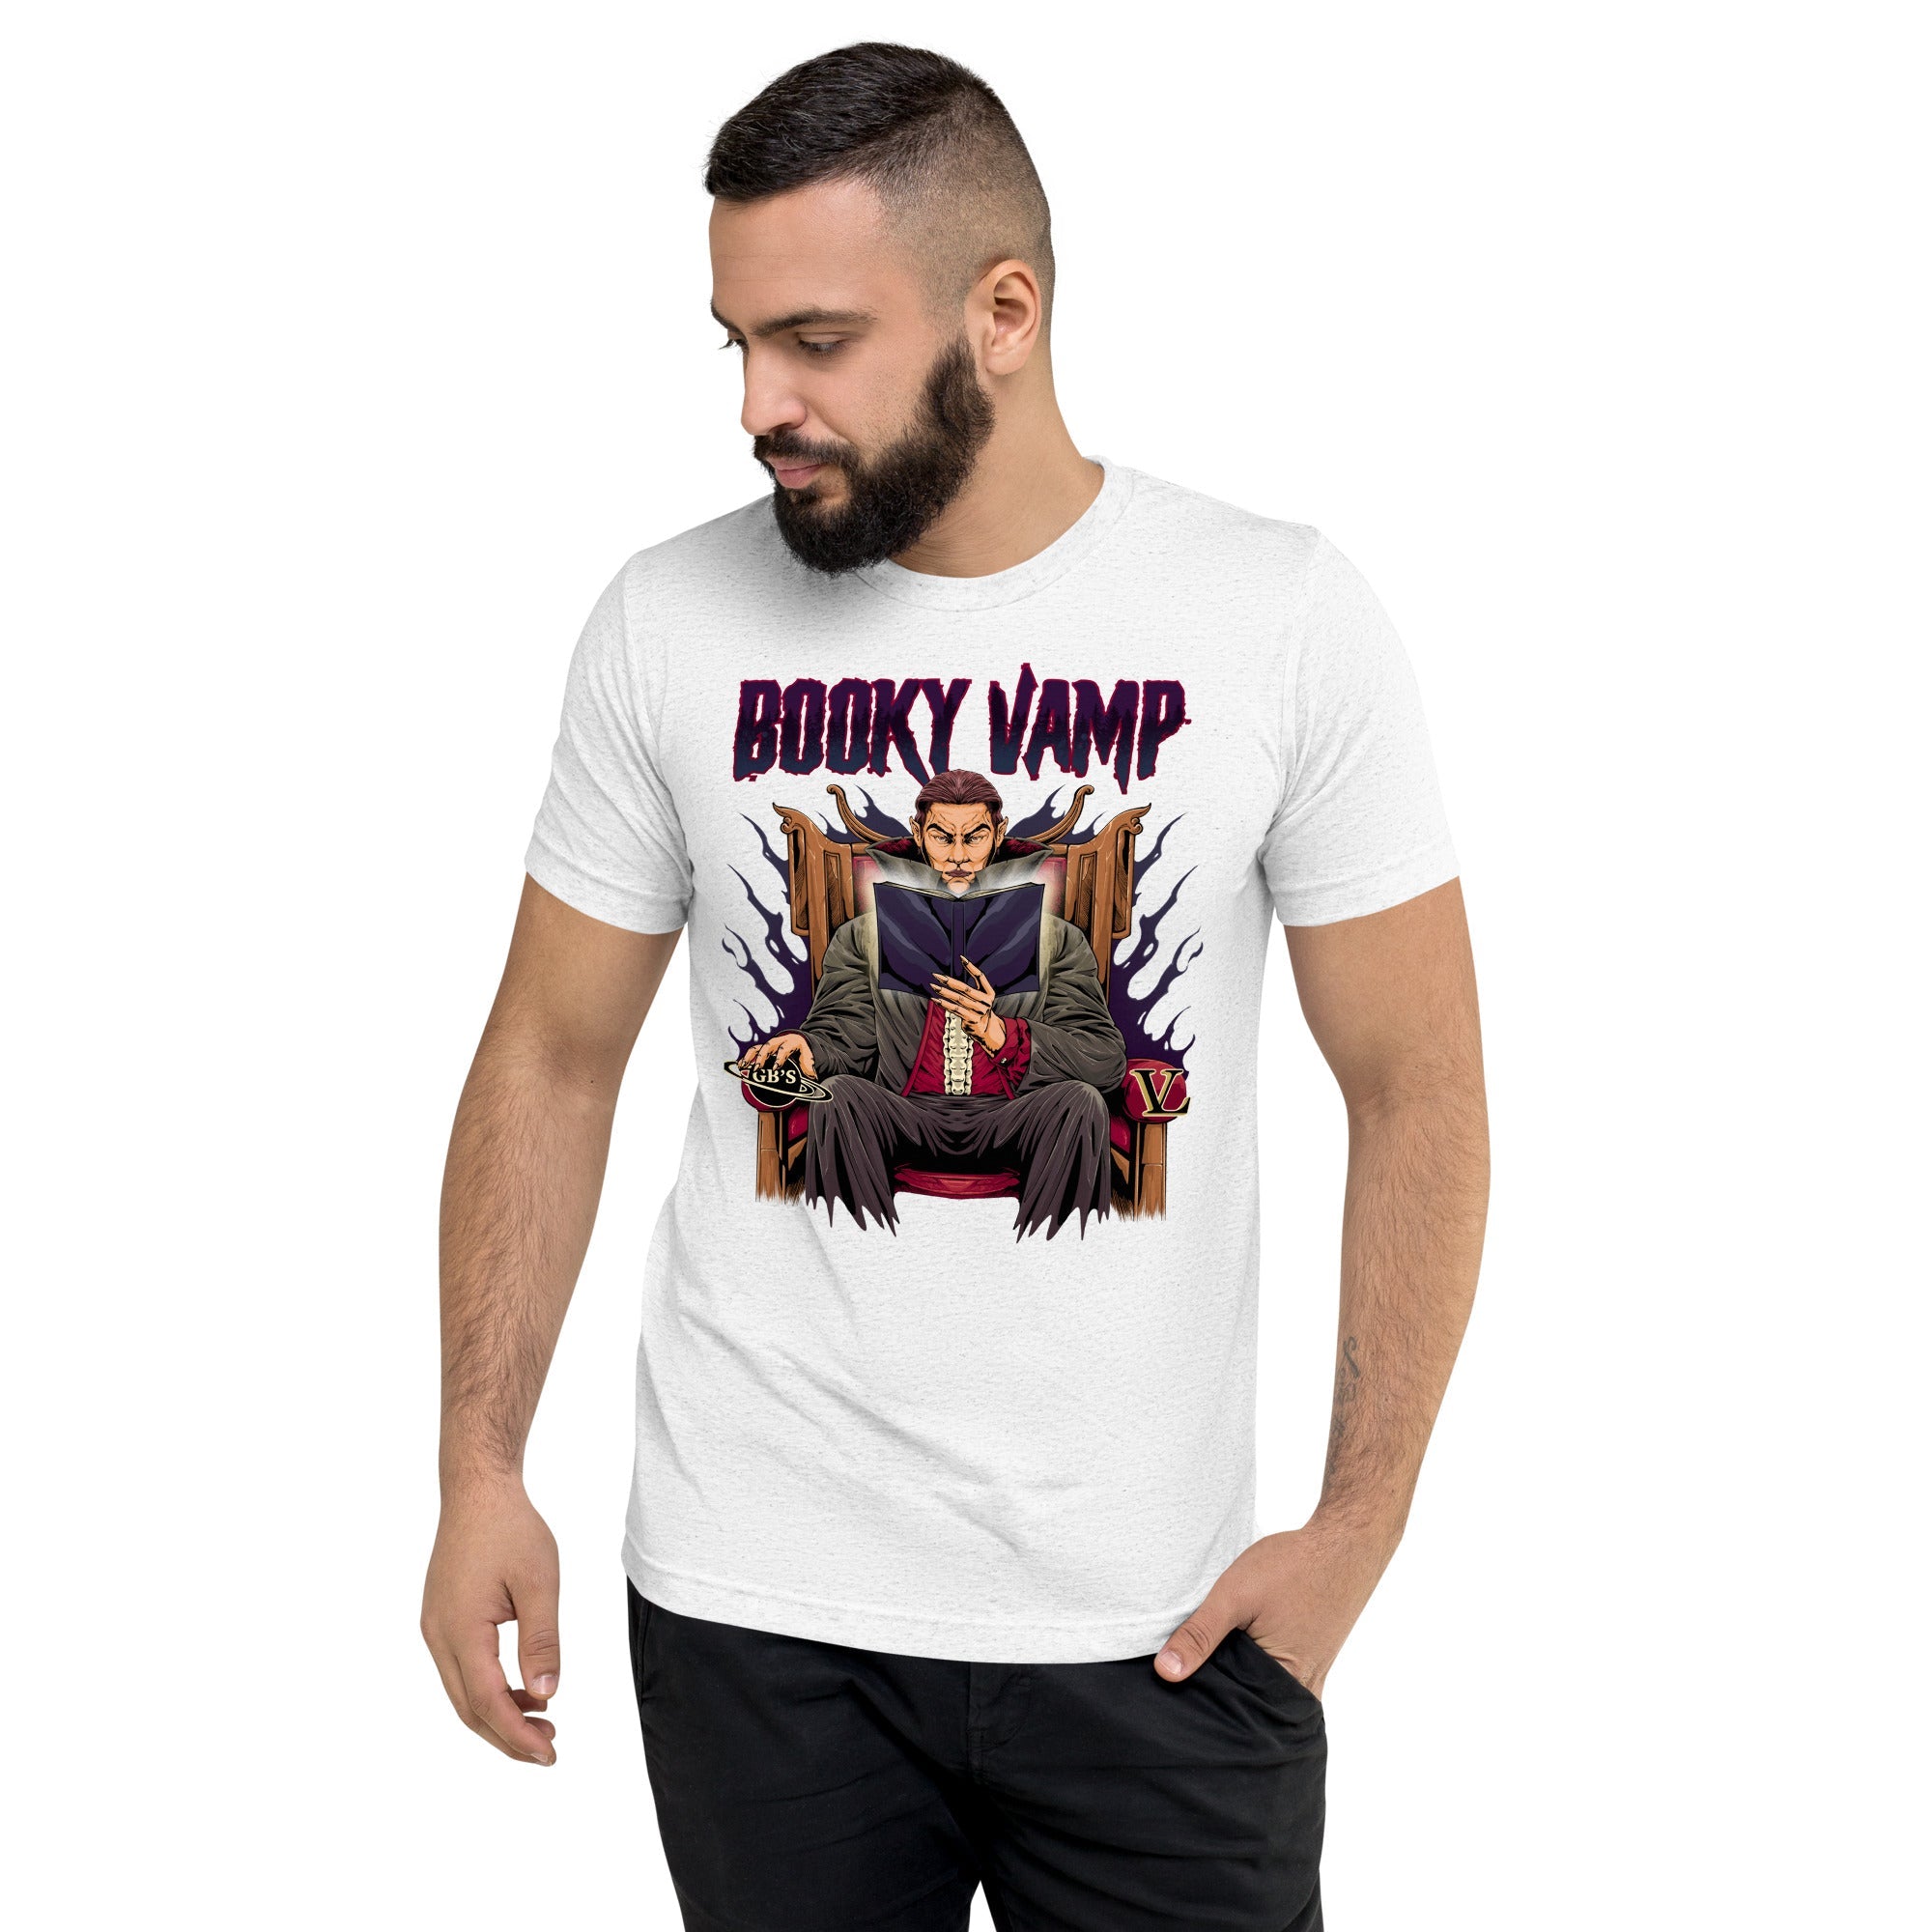 GBNY Solid White Triblend / XS Vamp Life X GBNY "Booky Vamp" T-shirt - Men's 2381652_16792